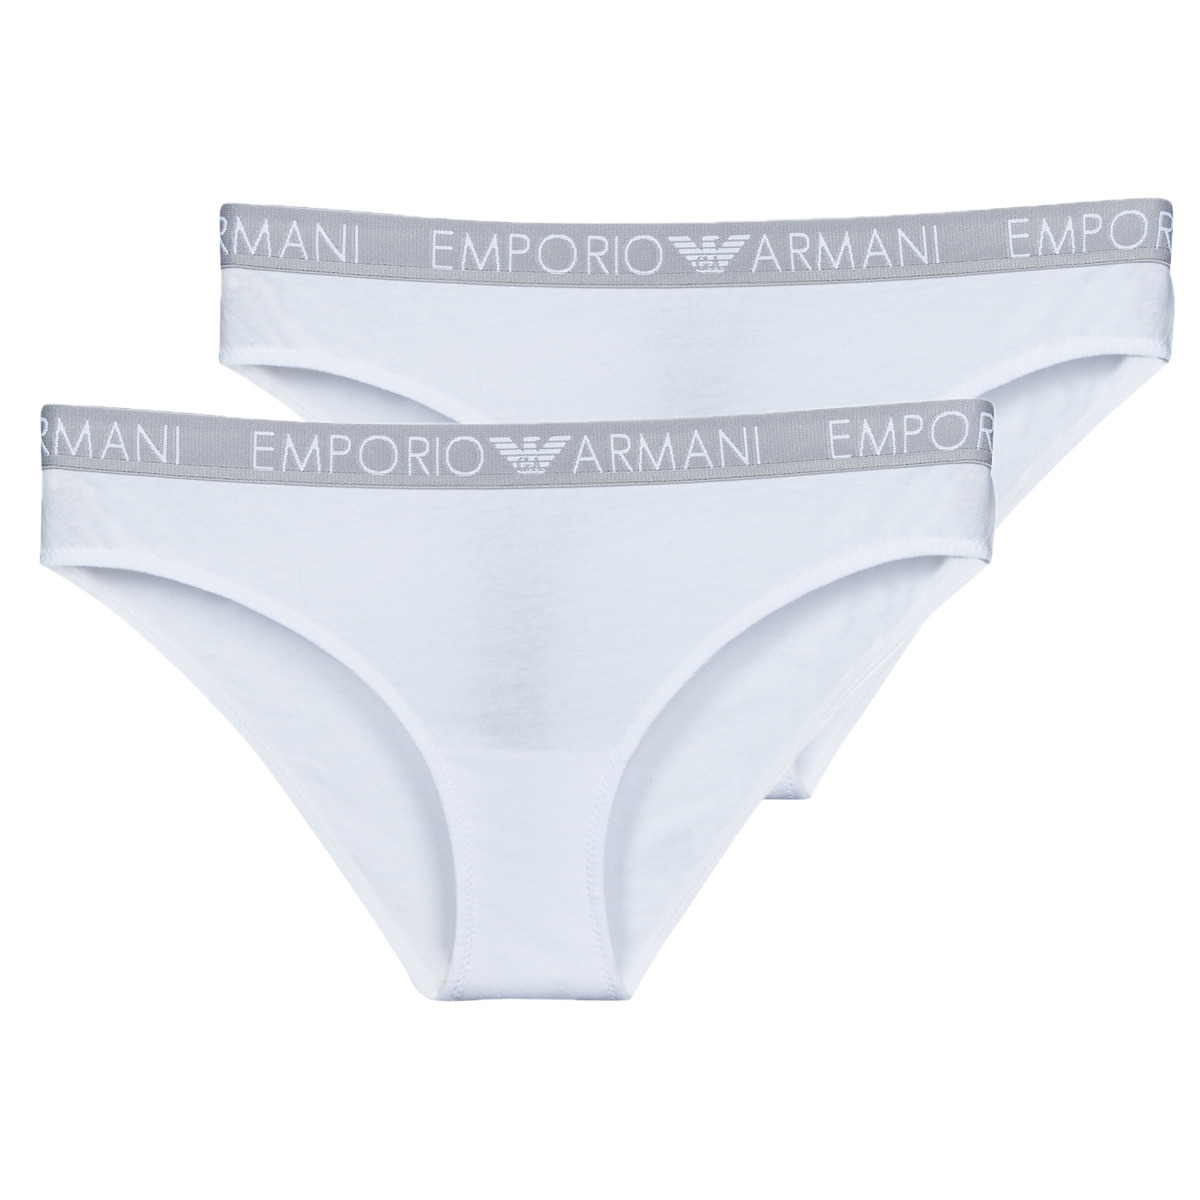 Emporio Armani Blanc BI-PACK BRAZILIAN BRIEF PACK X2 xq